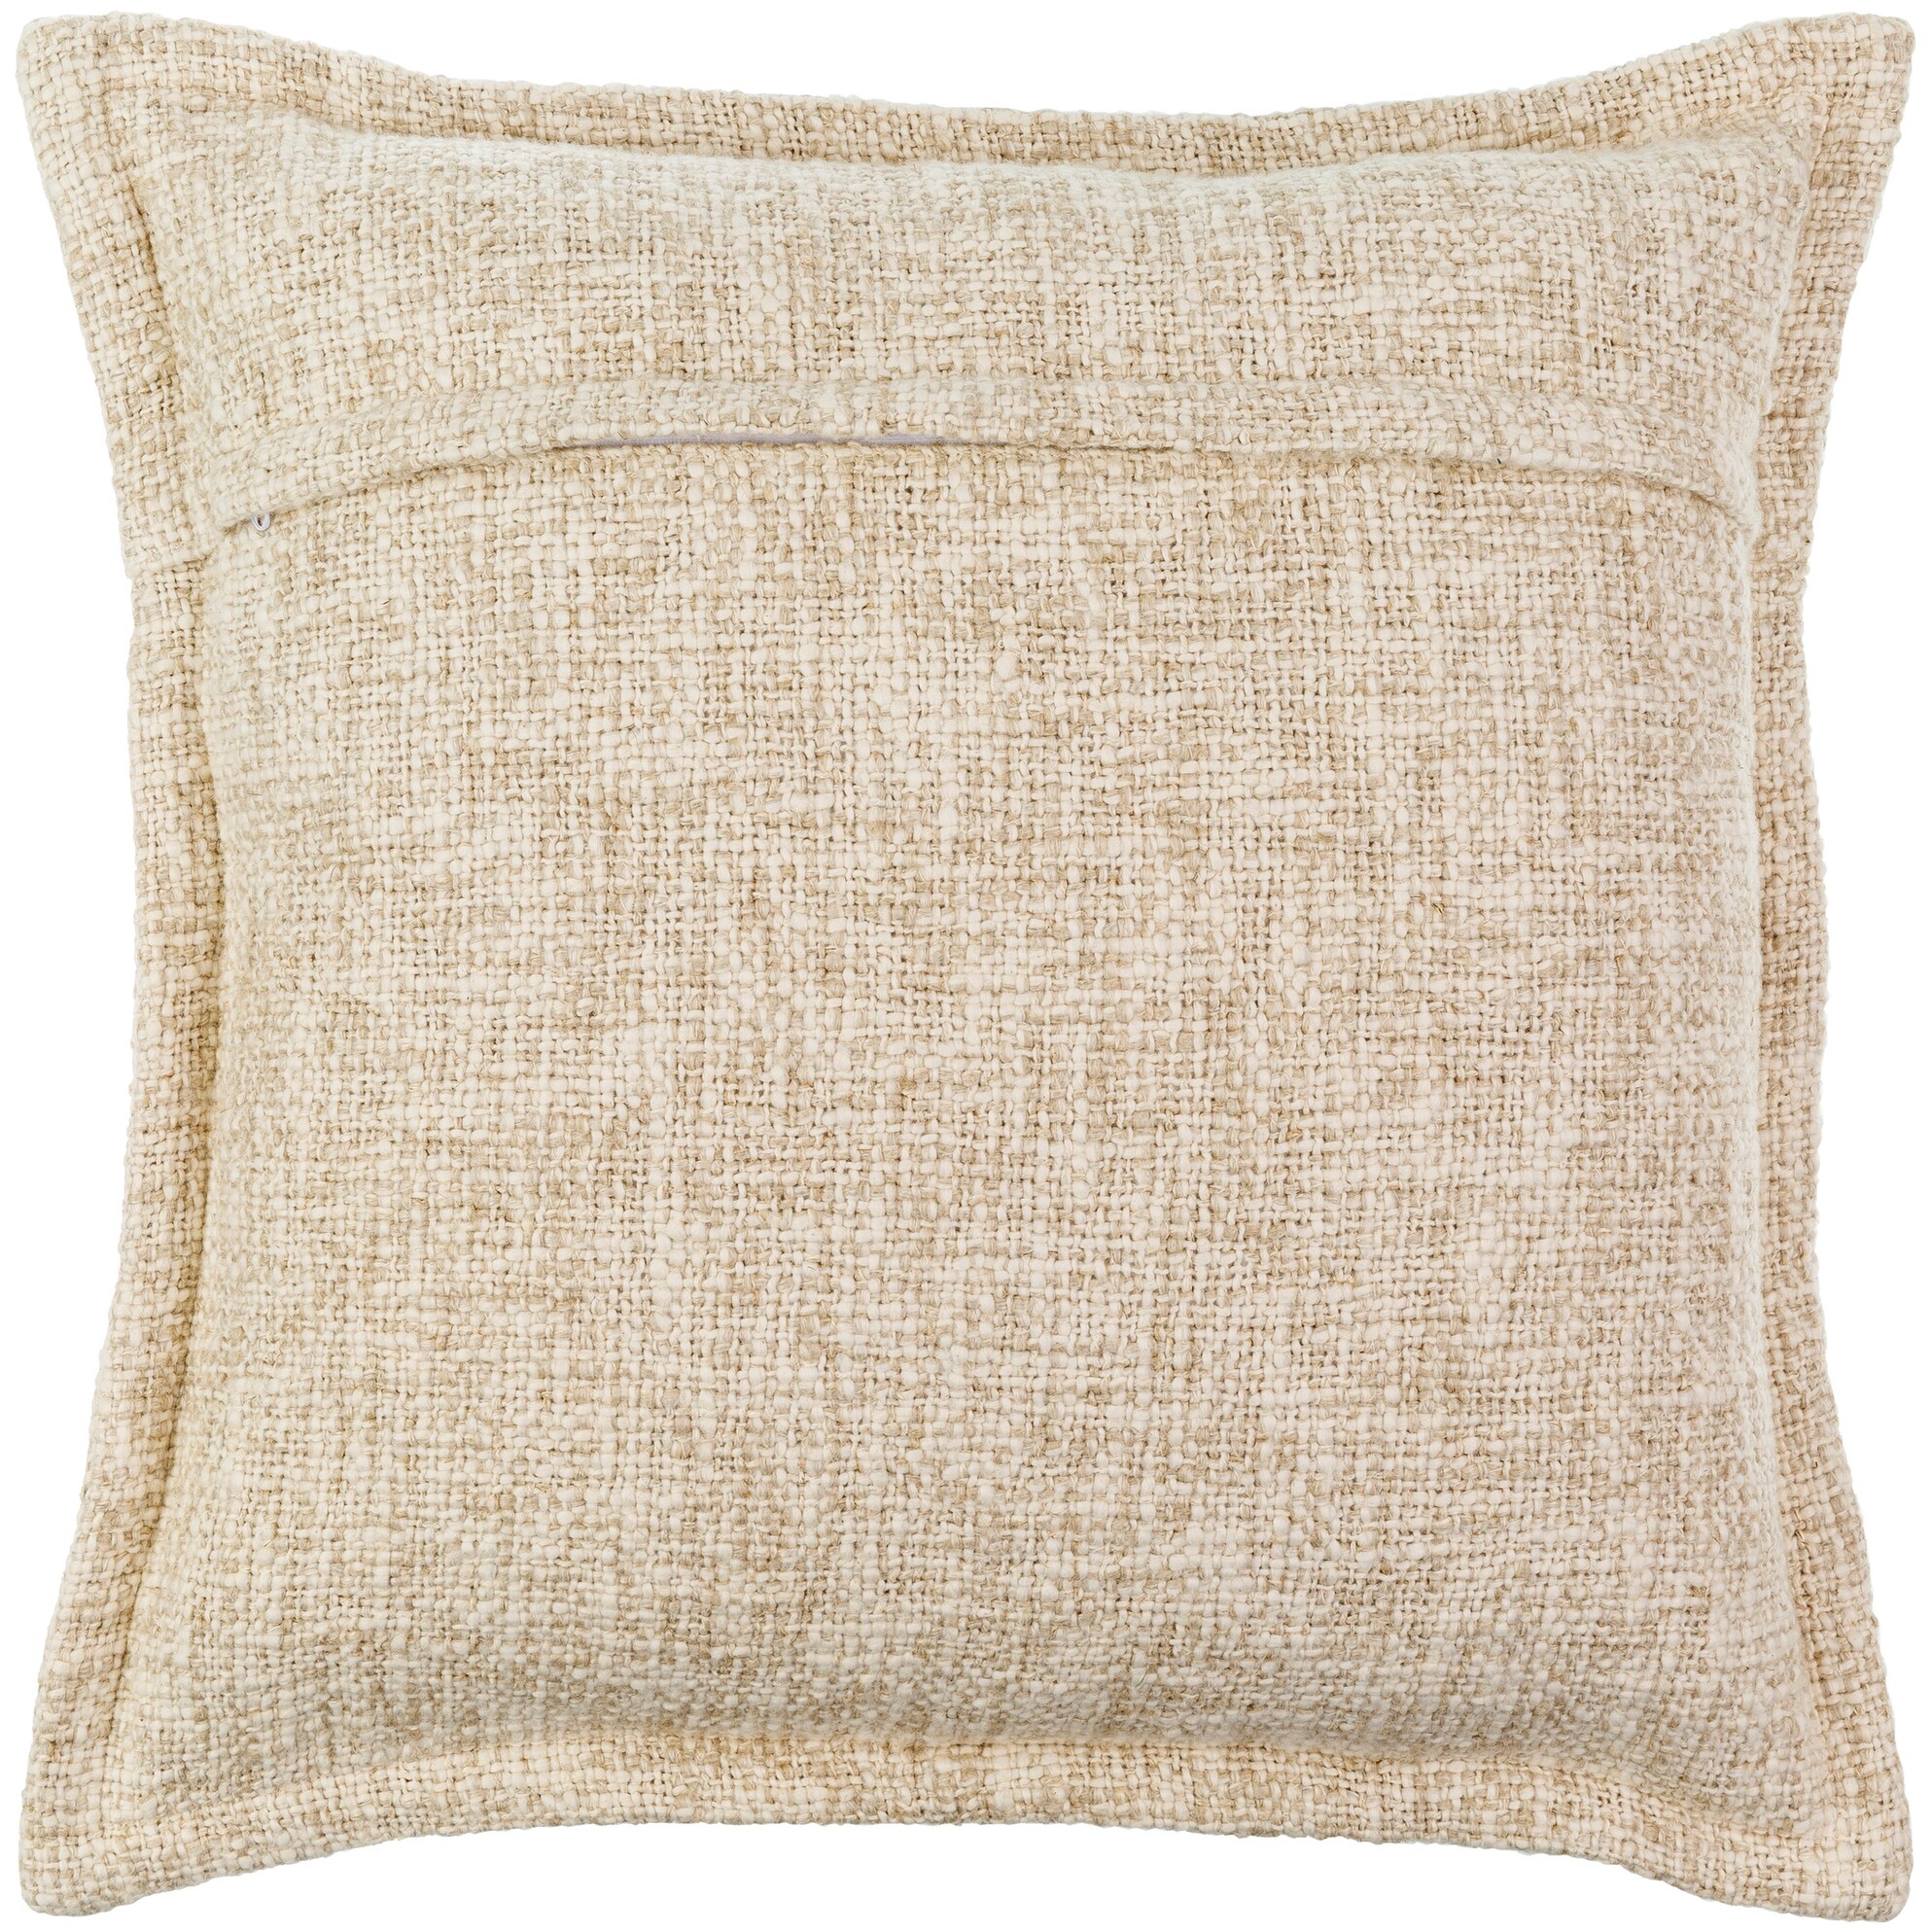 Berty Soft Textured Contemporary Throw Pillow